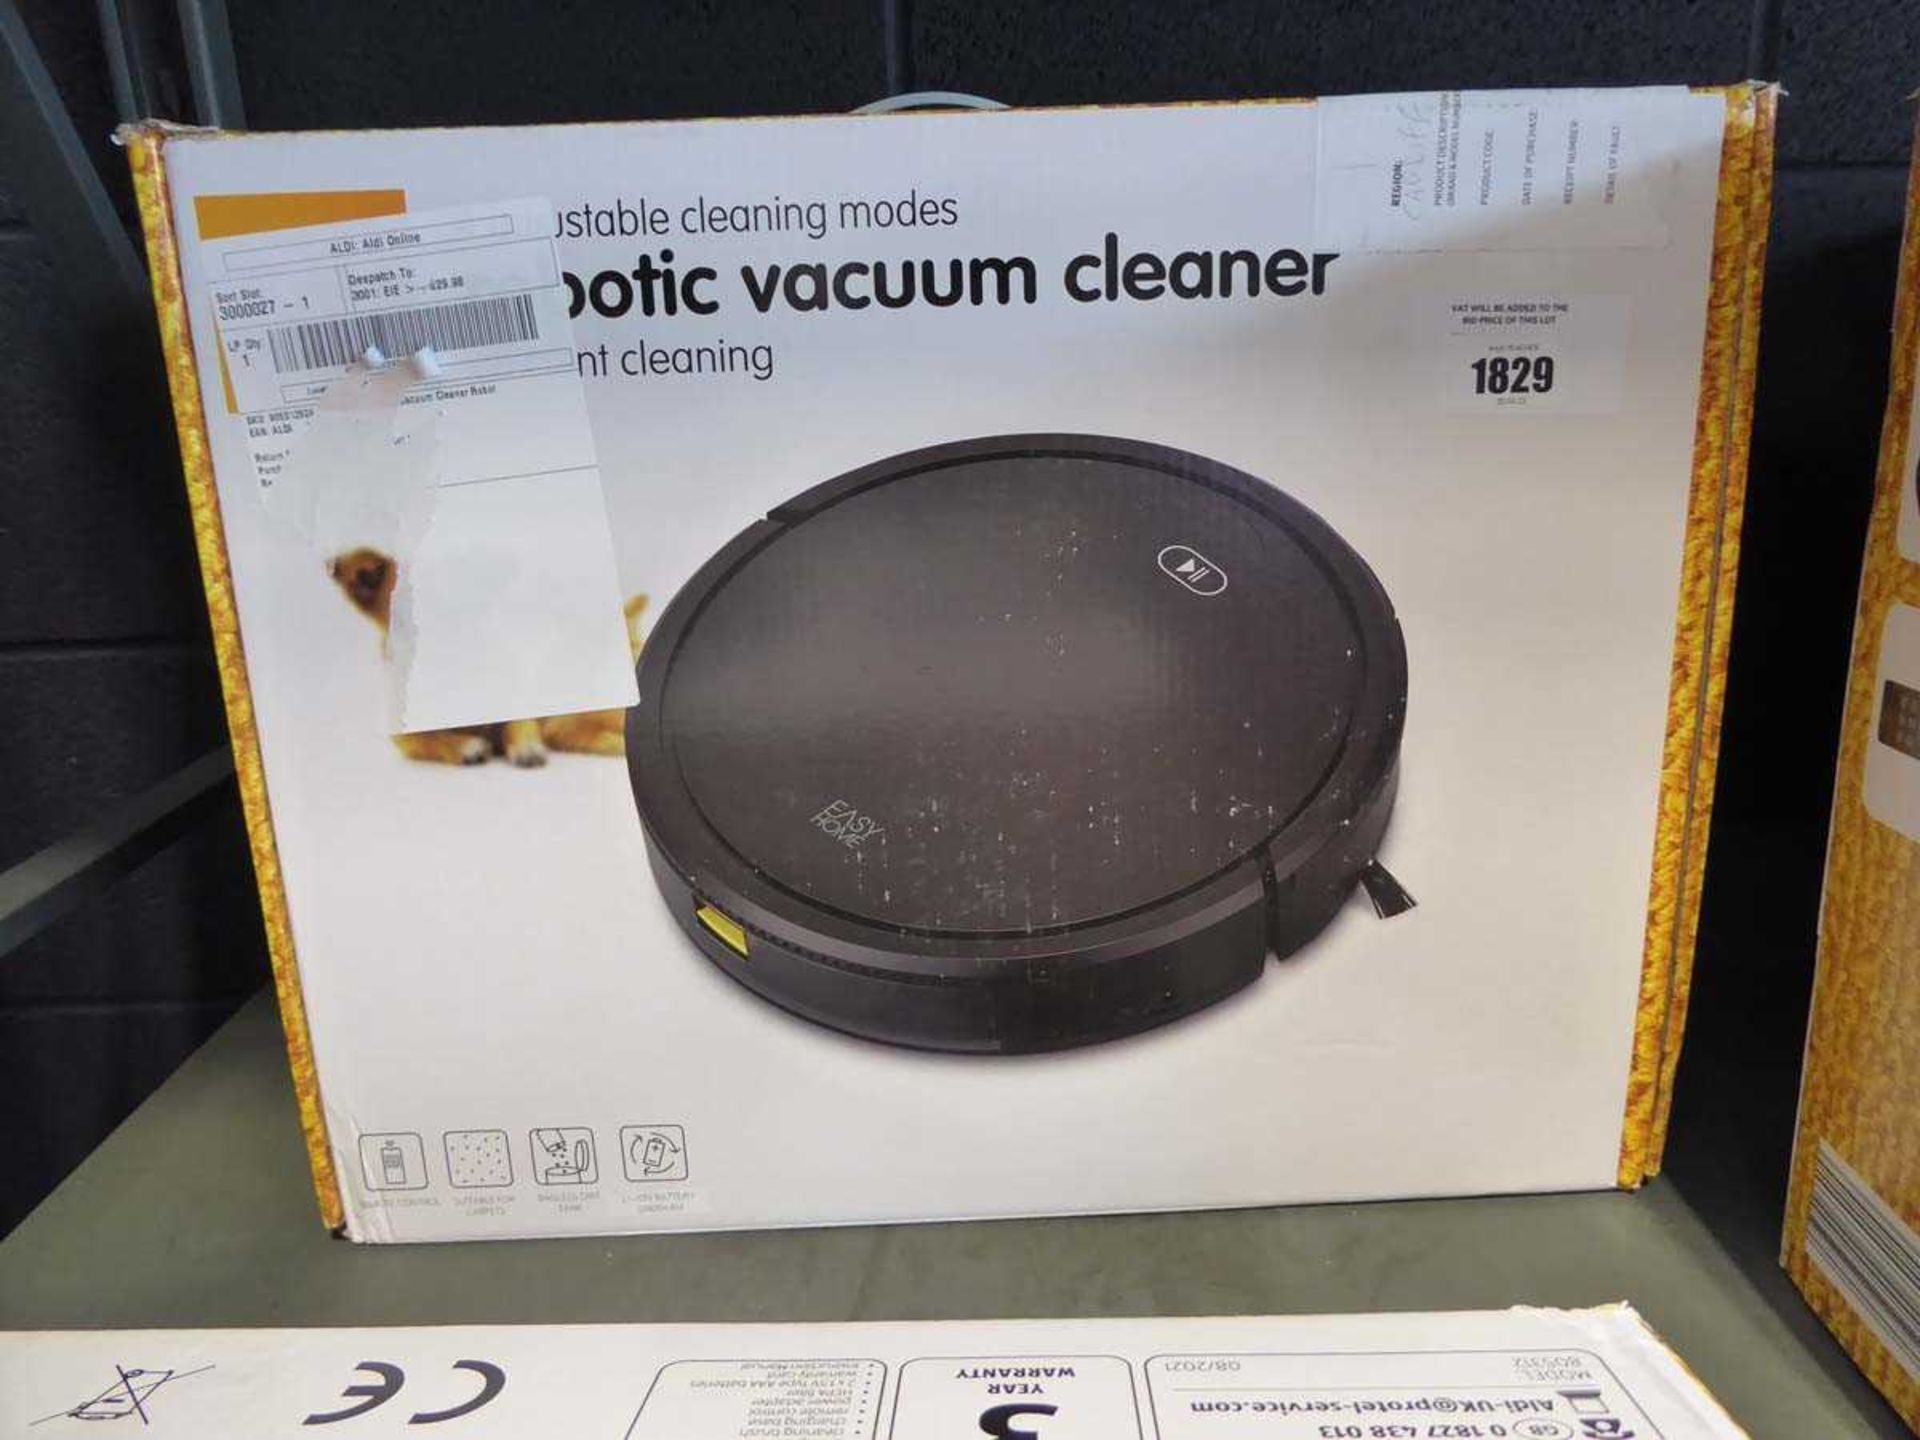 +VAT Easy Home robotic vacuum cleaner, in box